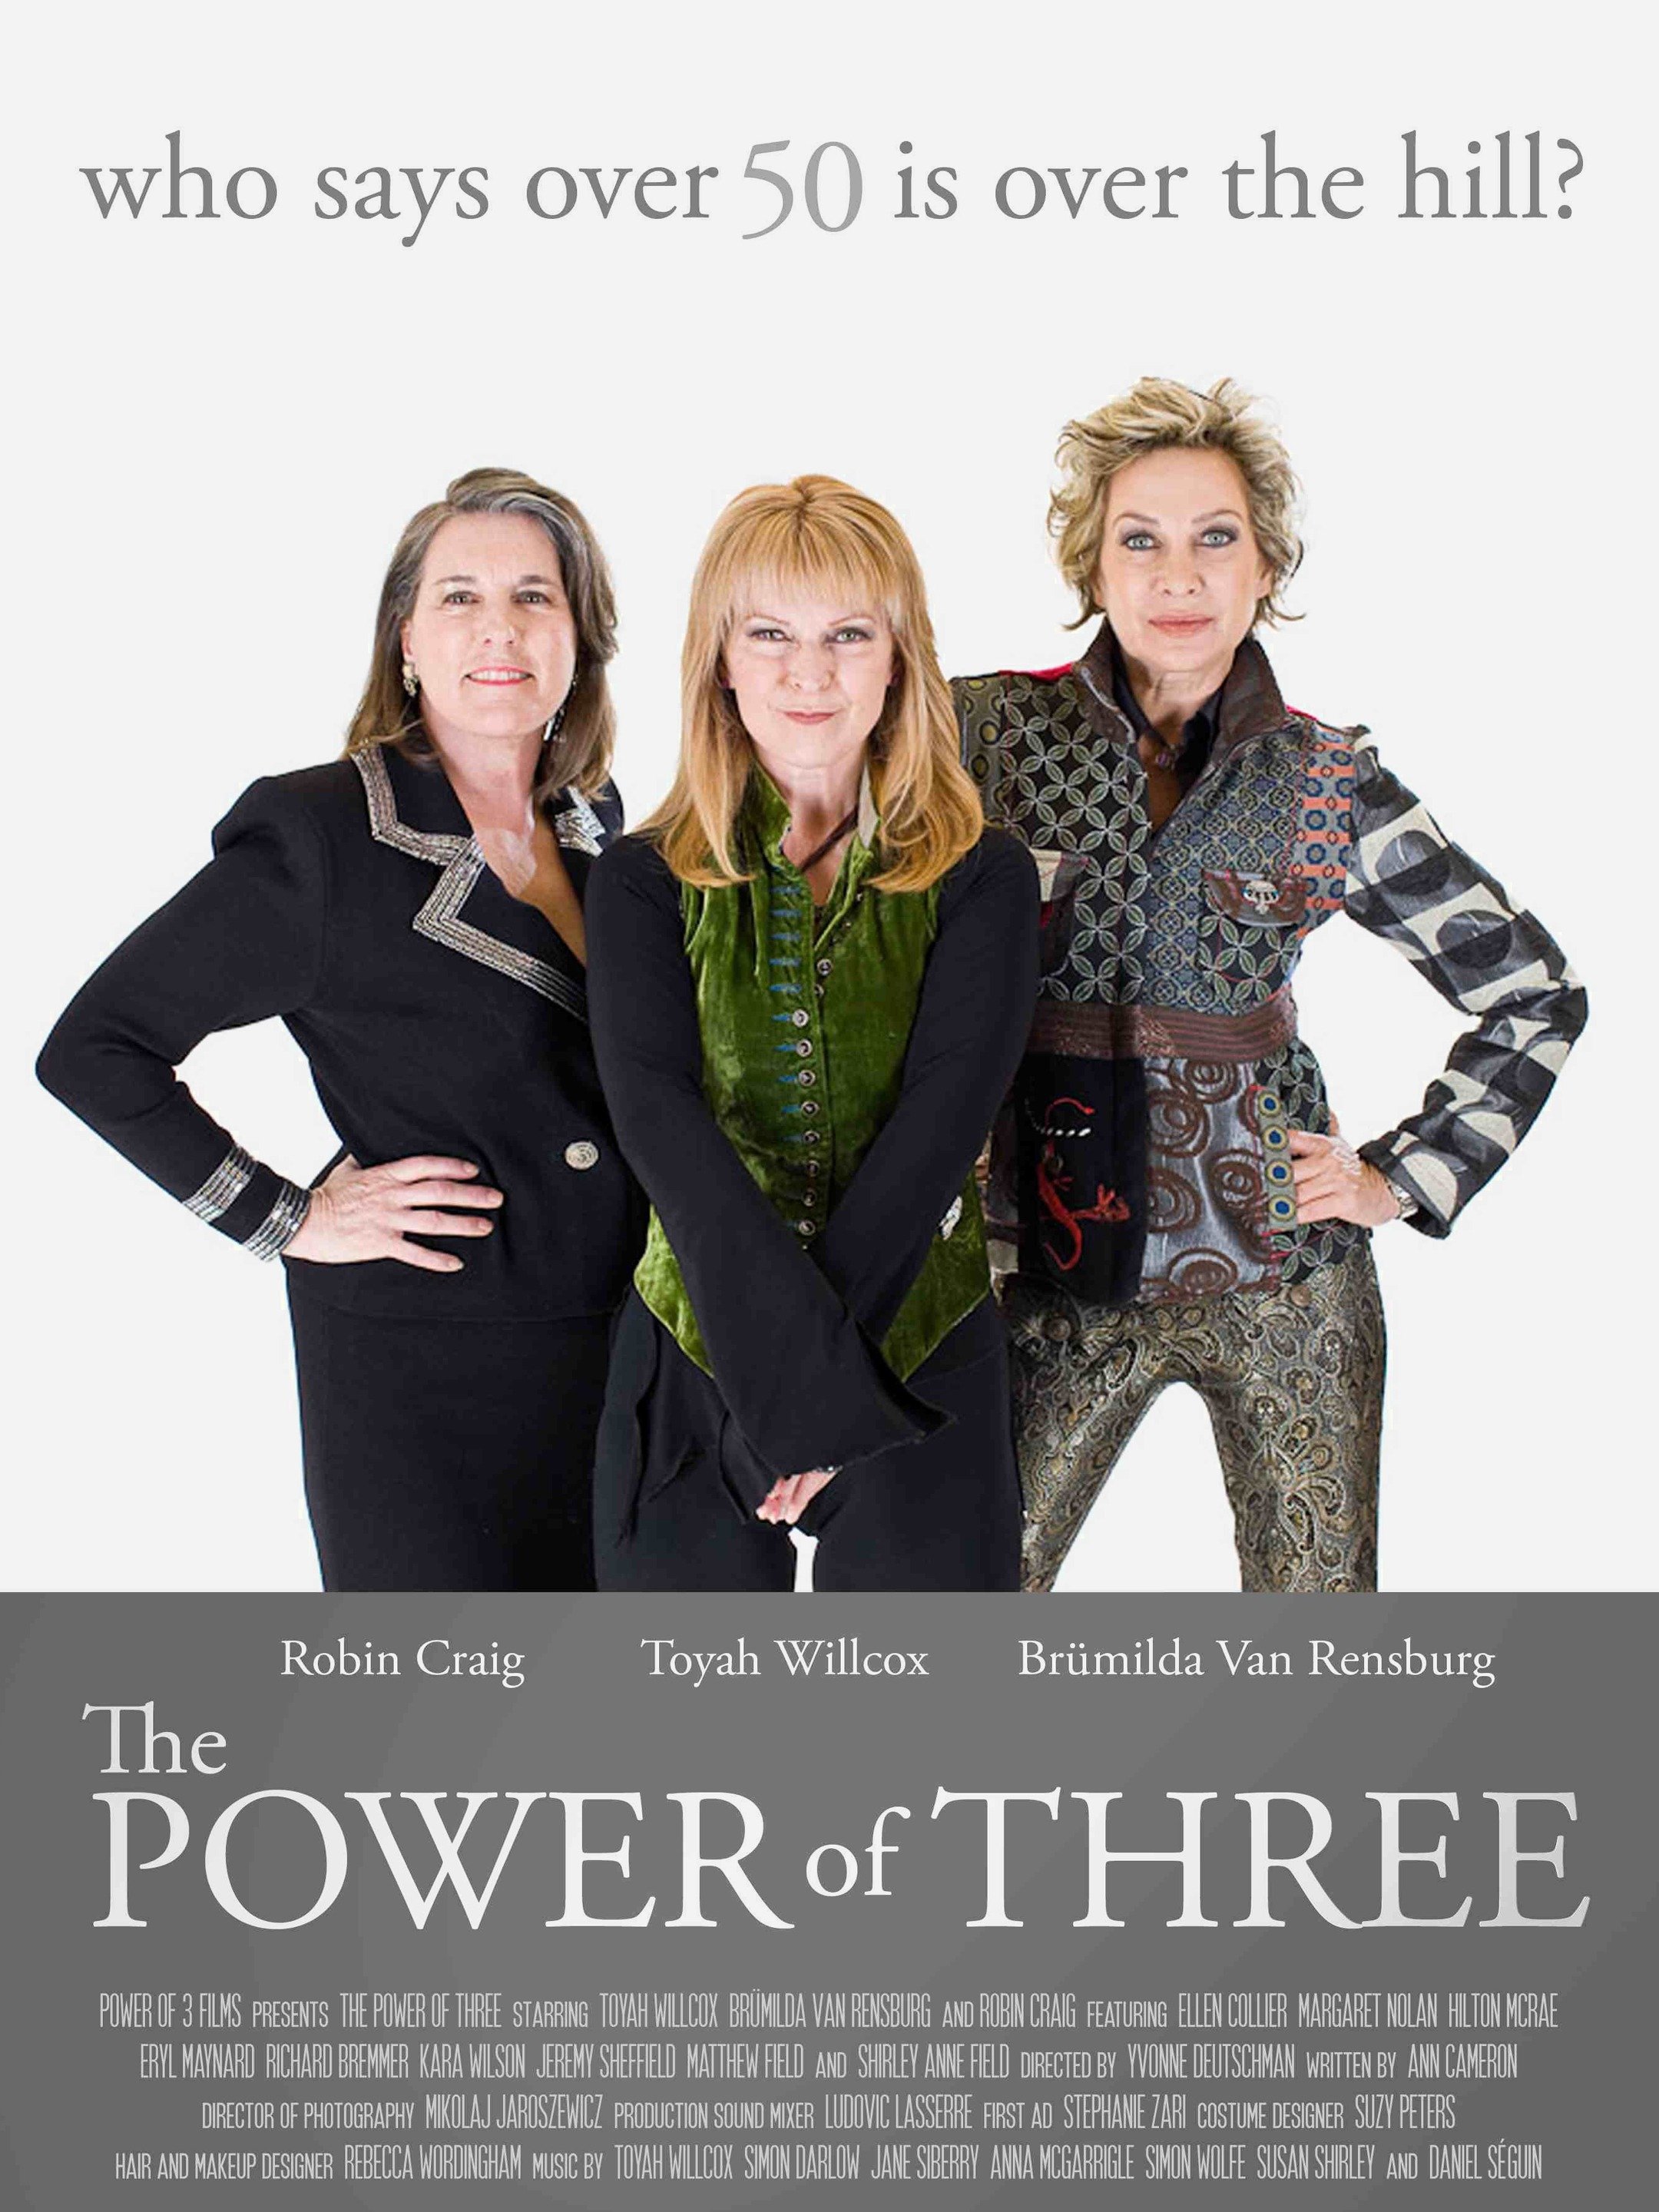 The Power of Three by Eliza Willard